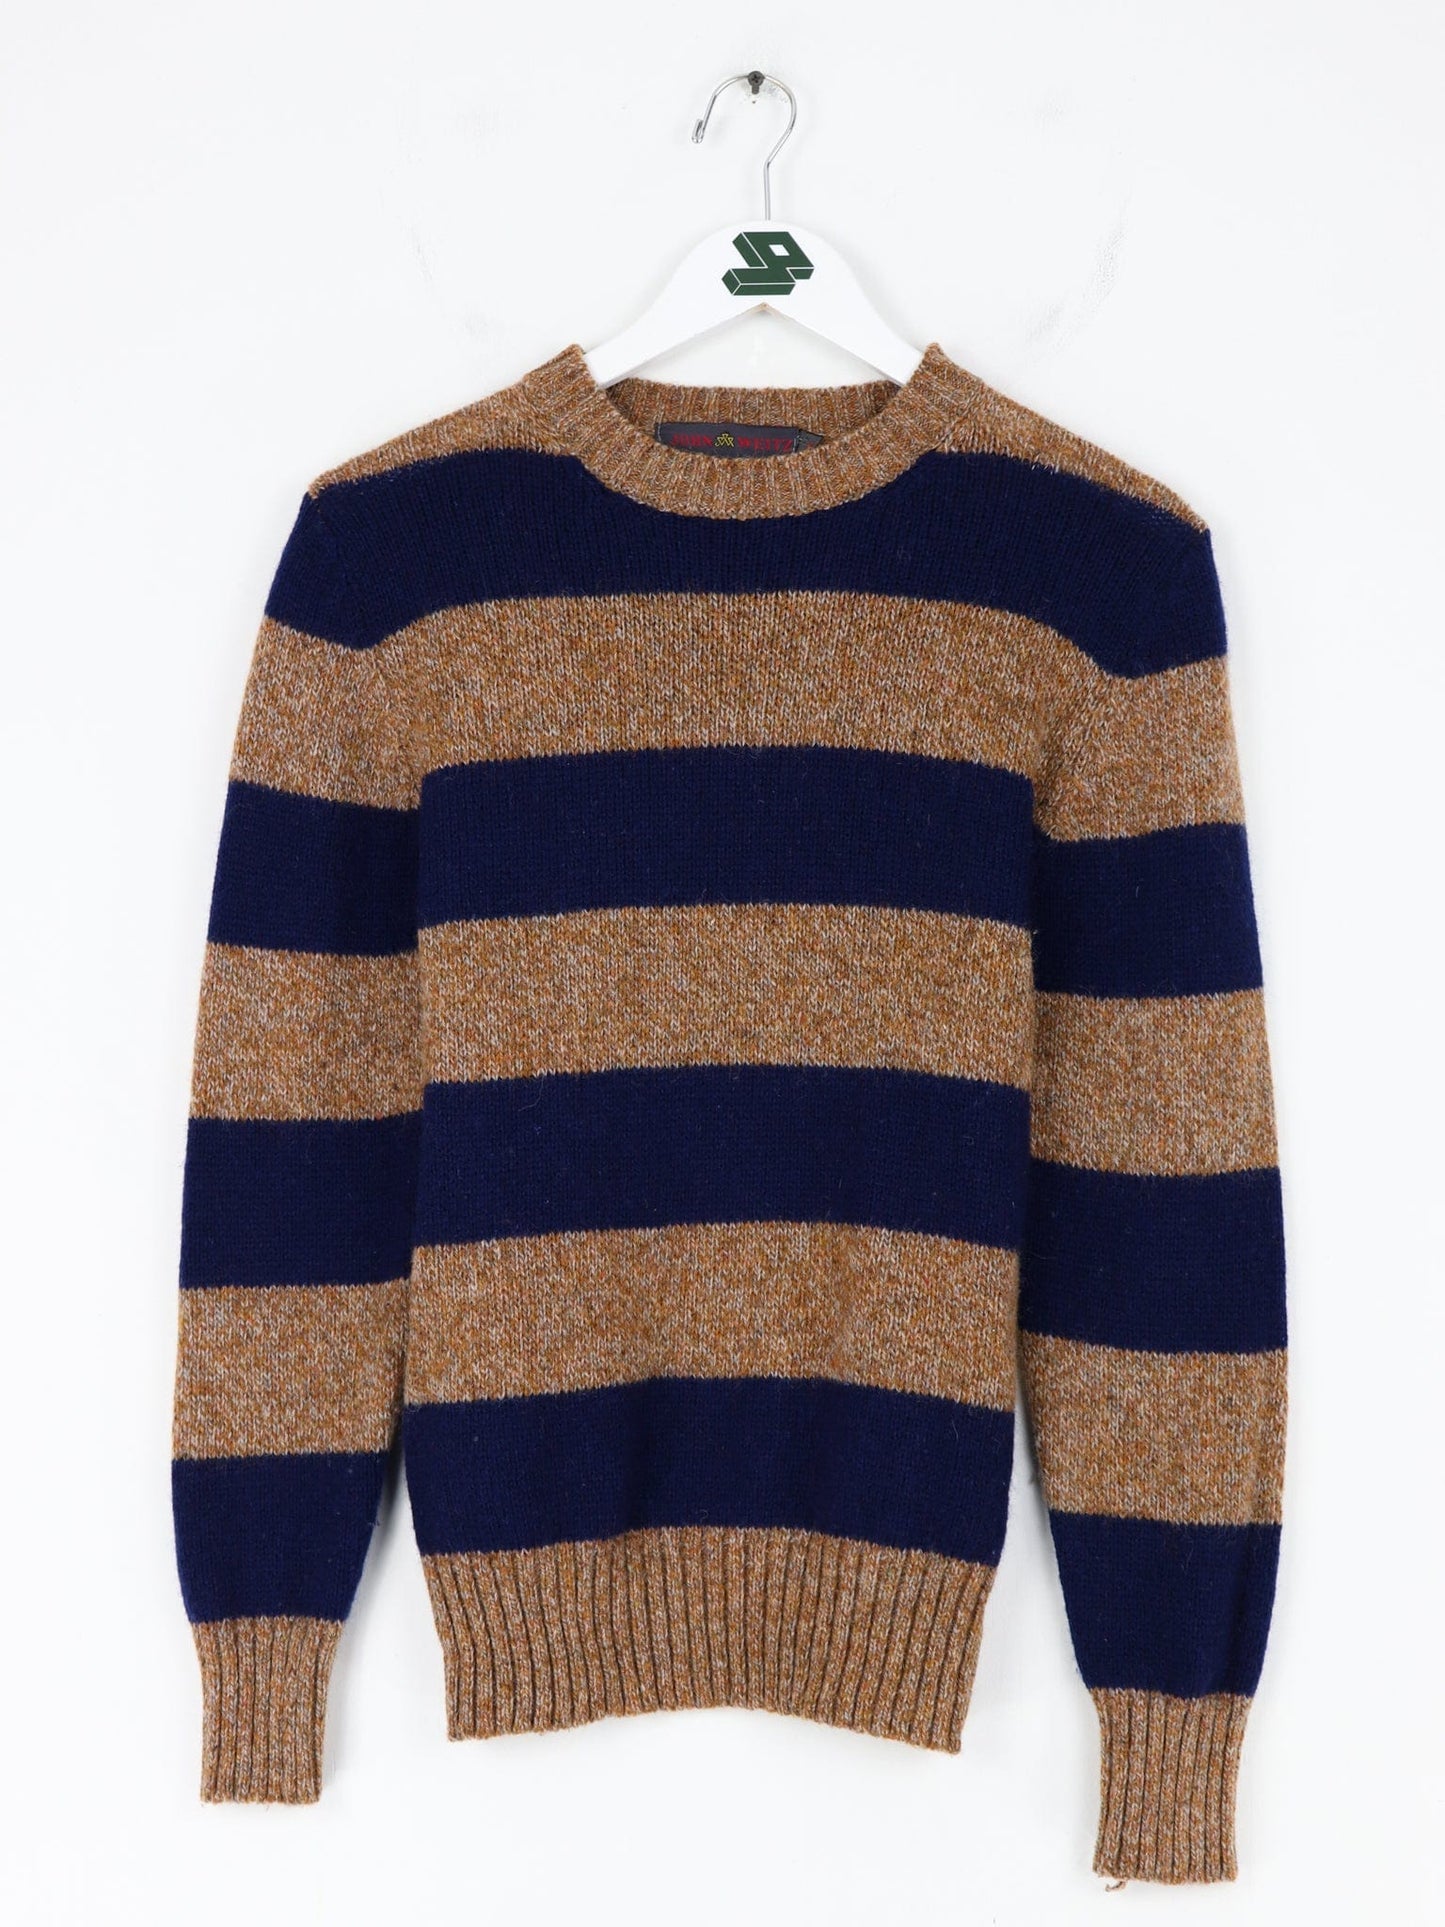 Other Sweatshirts & Hoodies Vintage John Weitz Striped Knit Sweater Size Small Fits XS